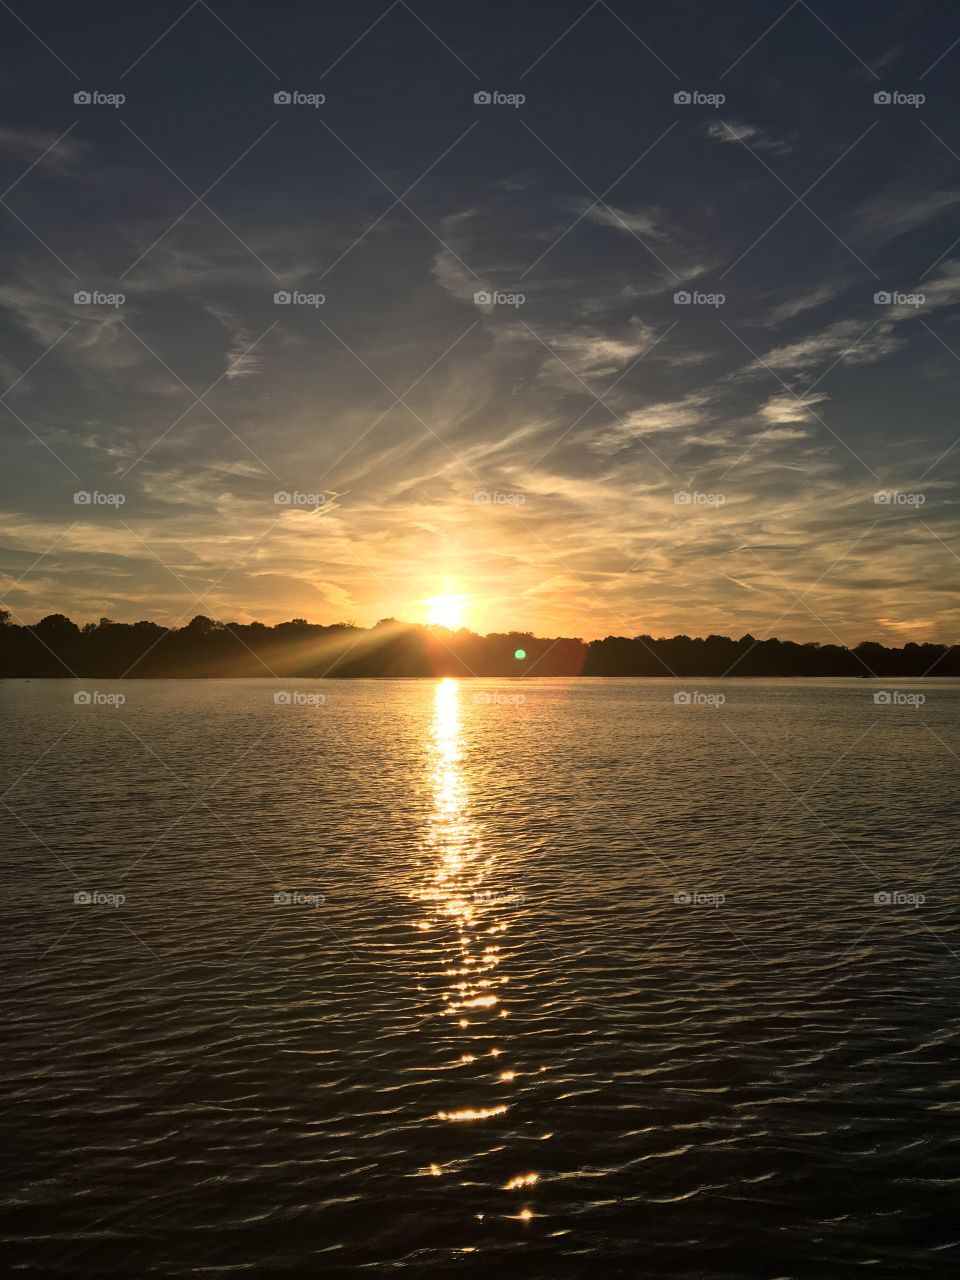 Sunset on the lake. 